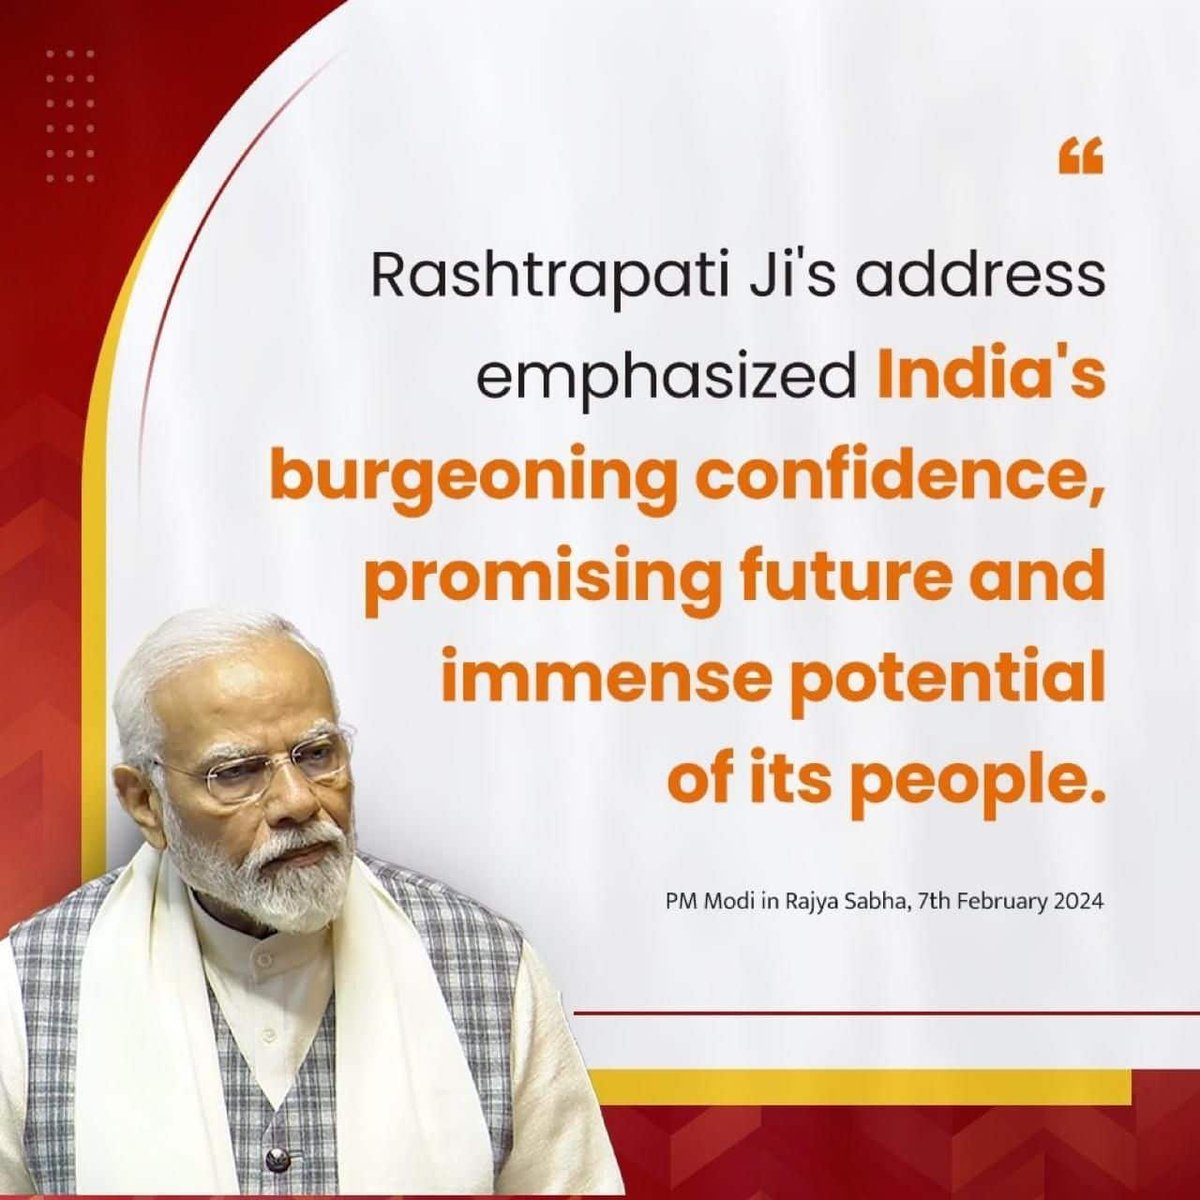 #PMInRajyaSabha
Rashtrapati Ji's address emphasized India's burgeoning confidence, promising future and immense potential of its people
via NaMo App